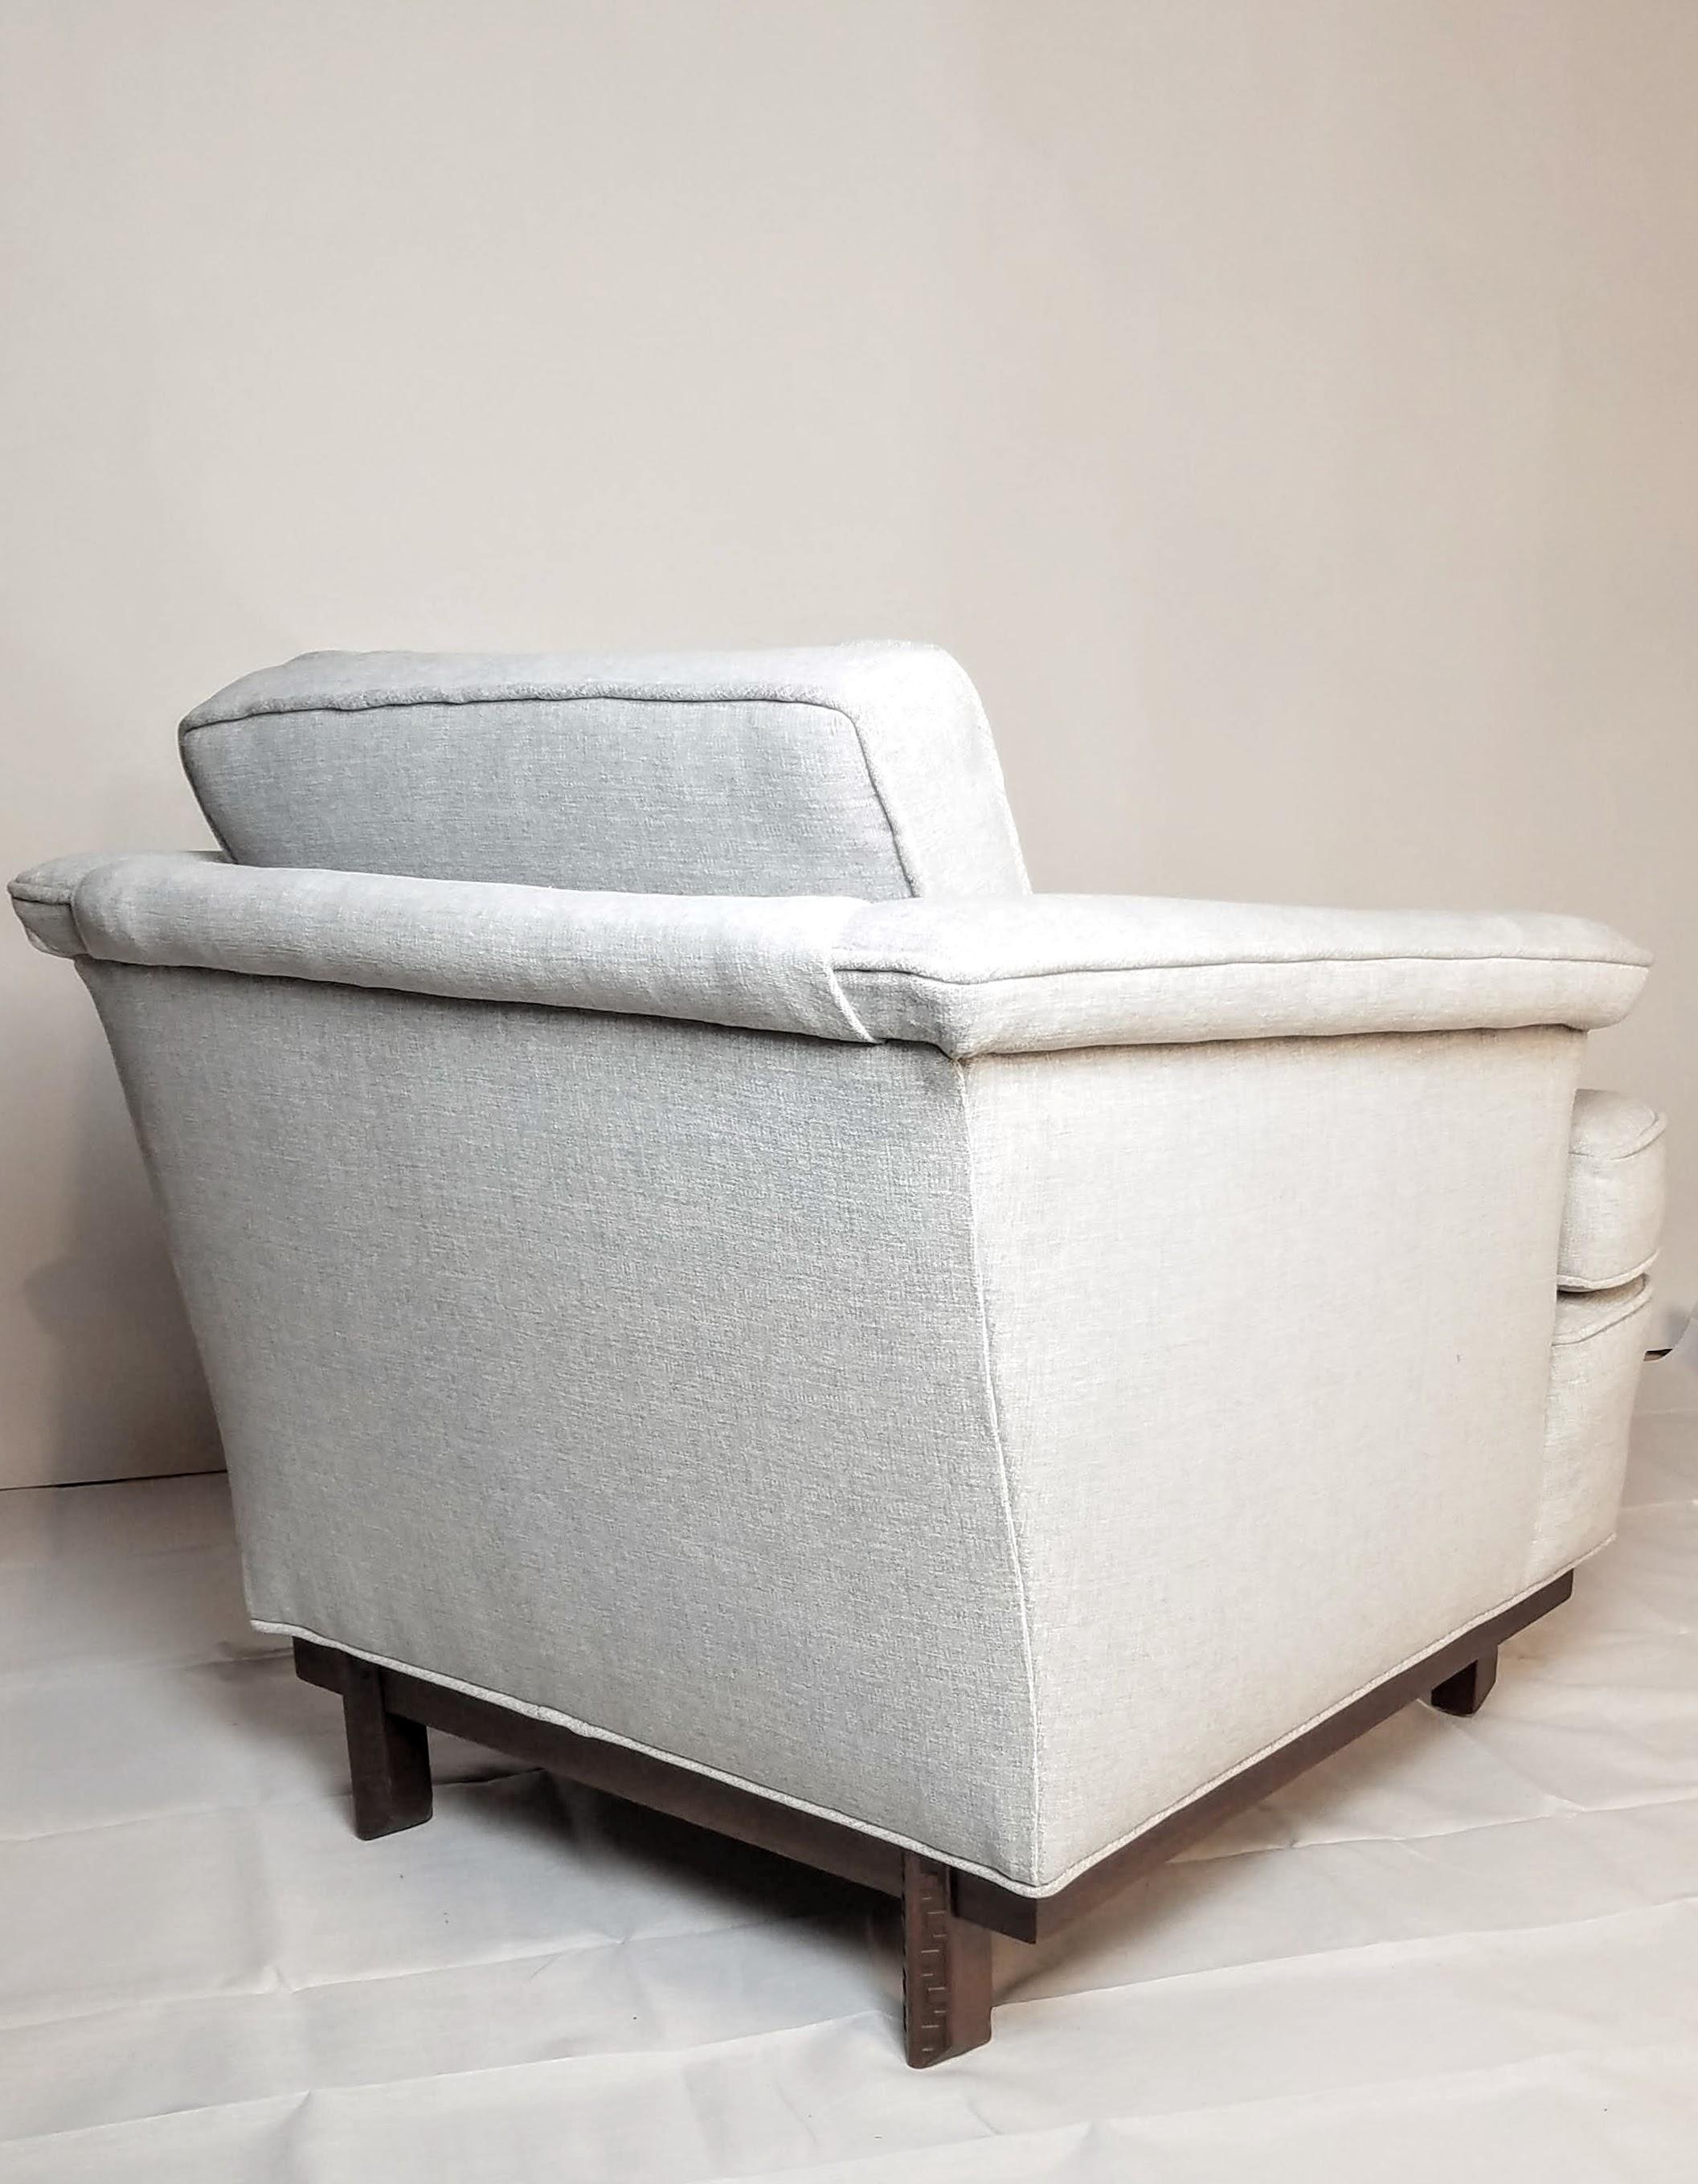 Frank Lloyd Wright Mahogany Lounge Chair Heritage Henredon Taliesin Line 1955/56 For Sale 3